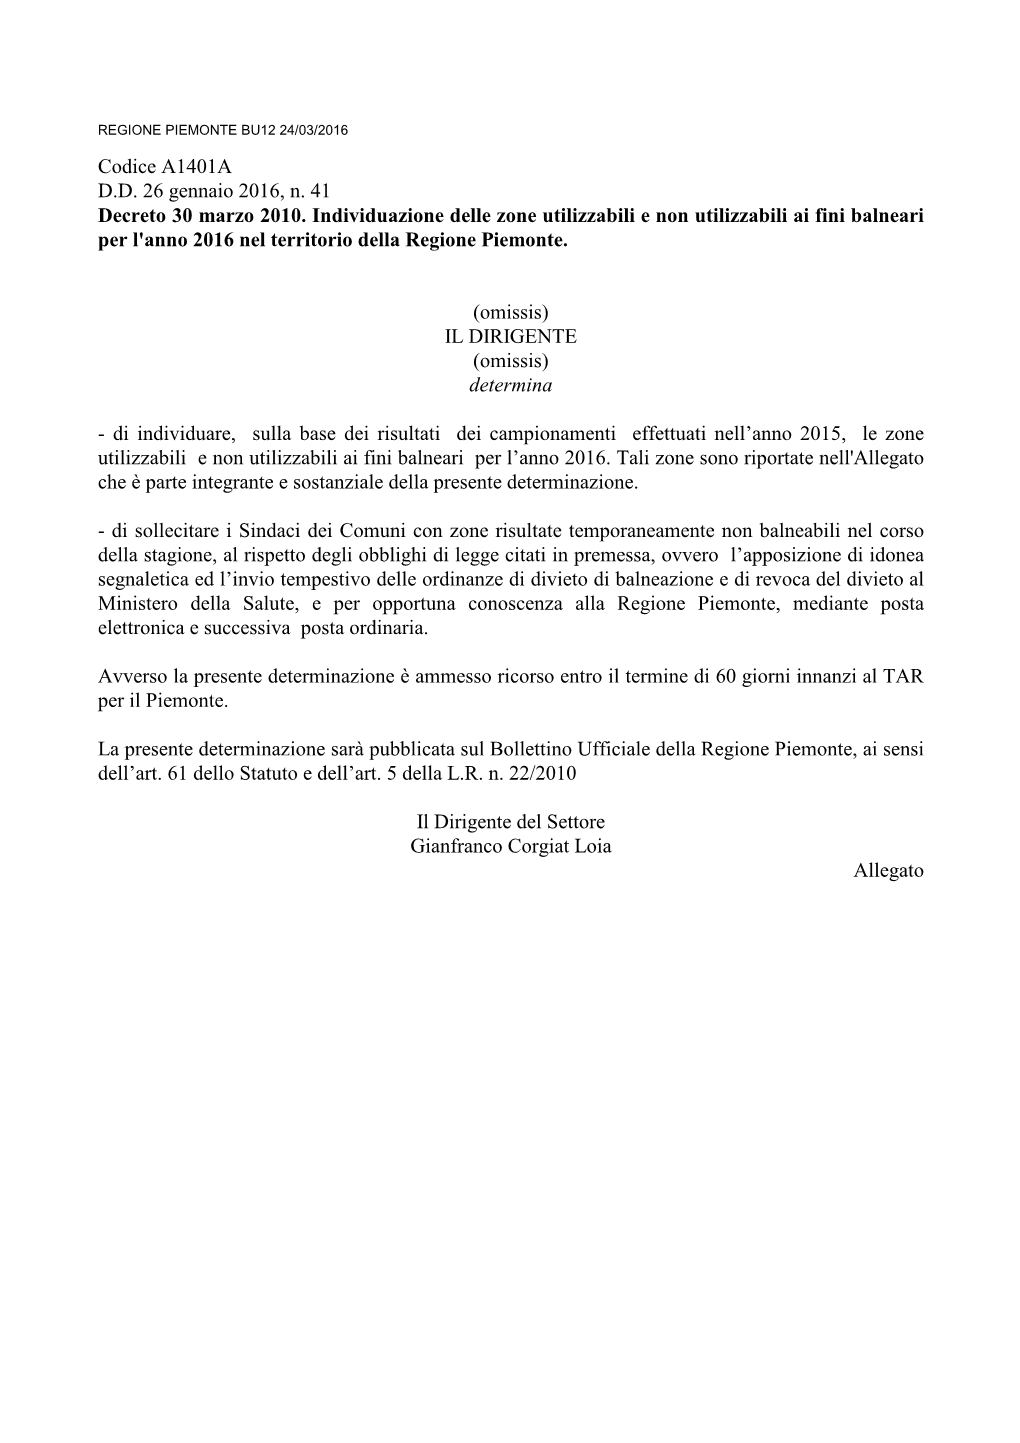 Codice A1401A D.D. 26 Gennaio 2016, N. 41 Decreto 30 Marzo 2010